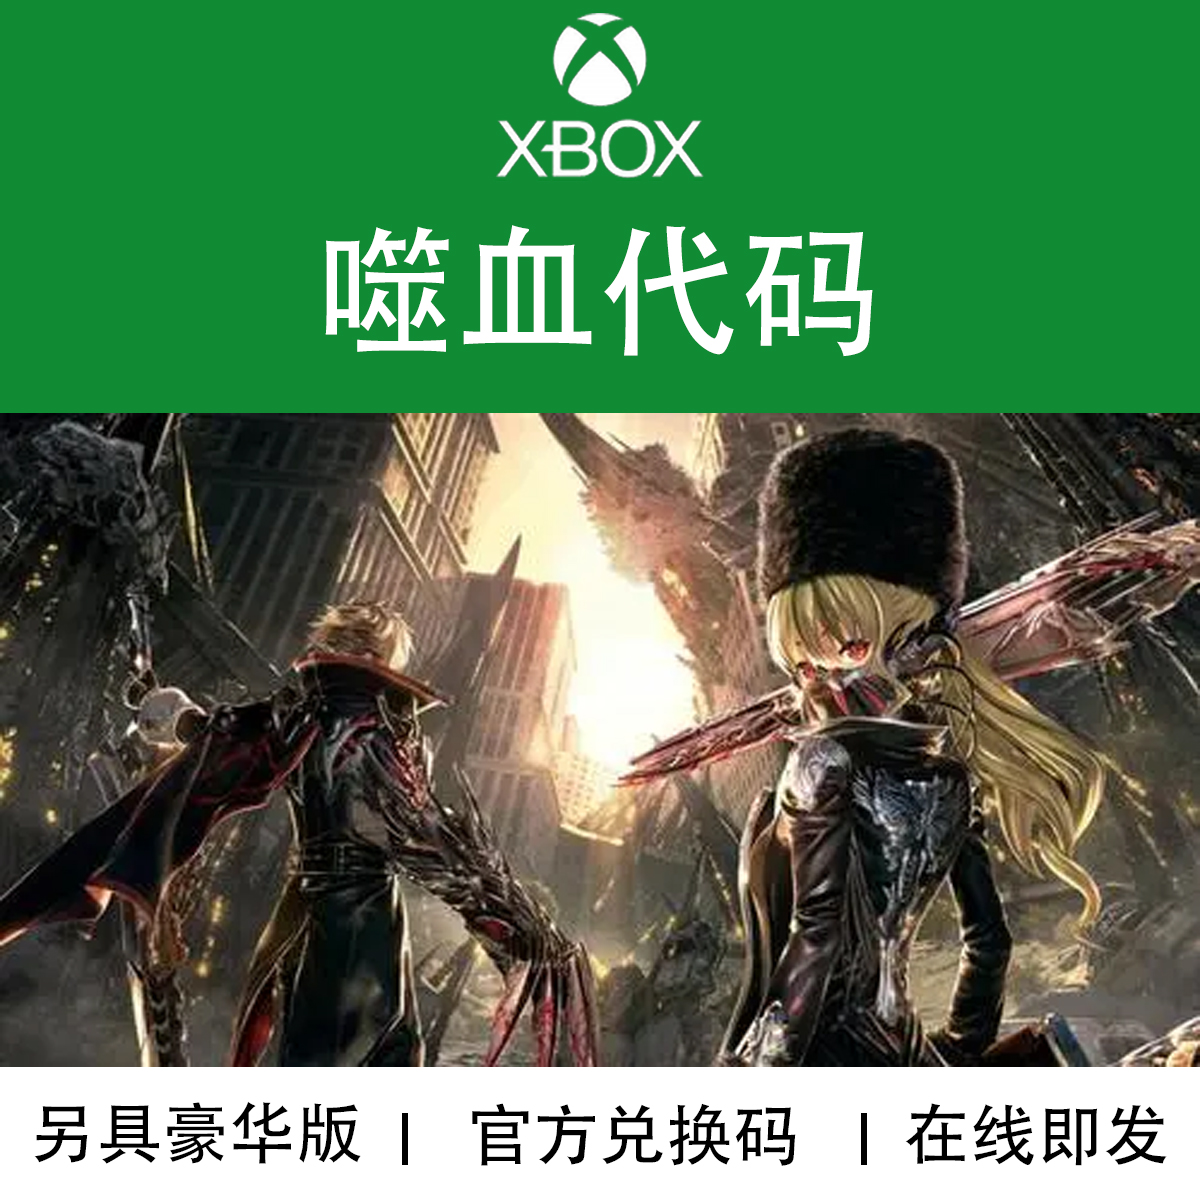 XBOX游戏 噬血代码 豪华版 CODE VEIN 官方数字兑换下载码